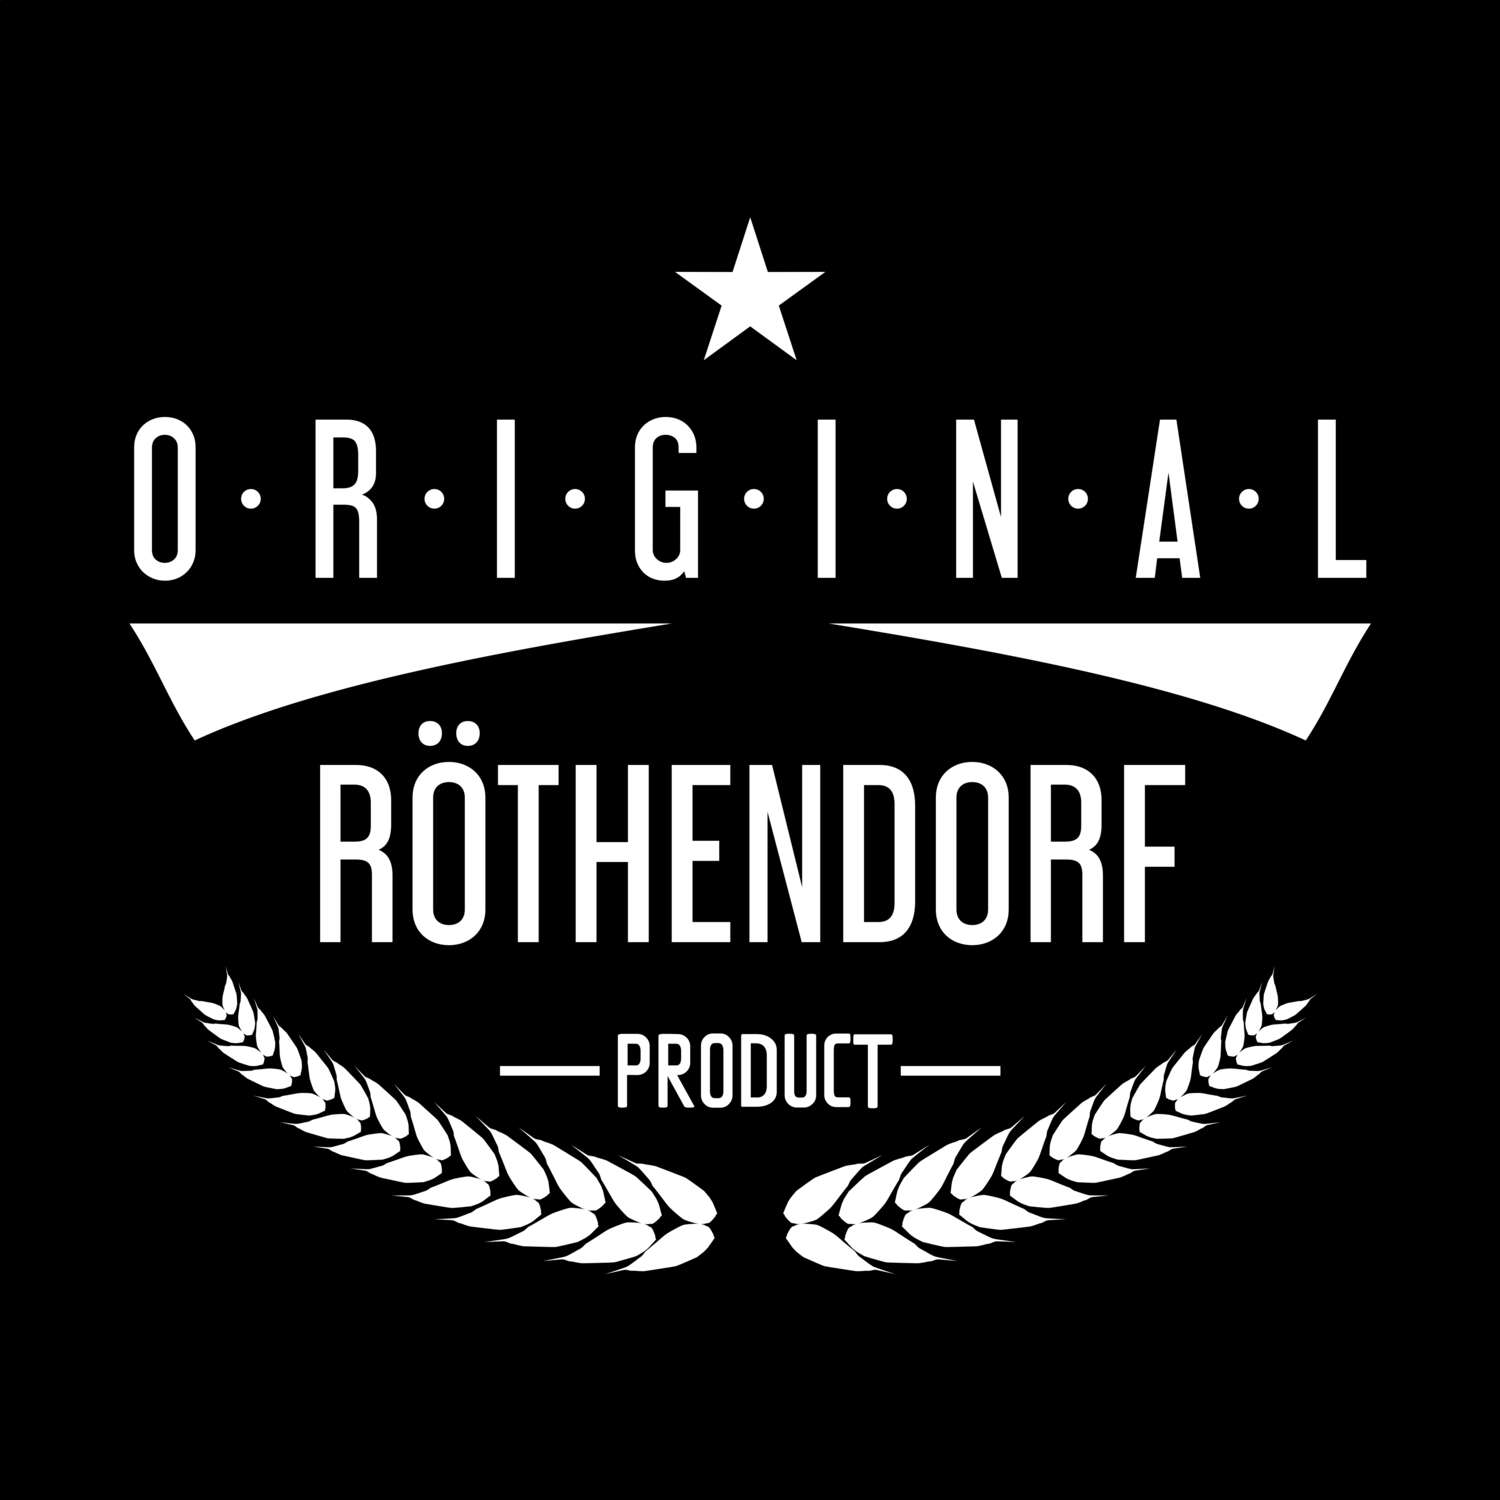 Röthendorf T-Shirt »Original Product«